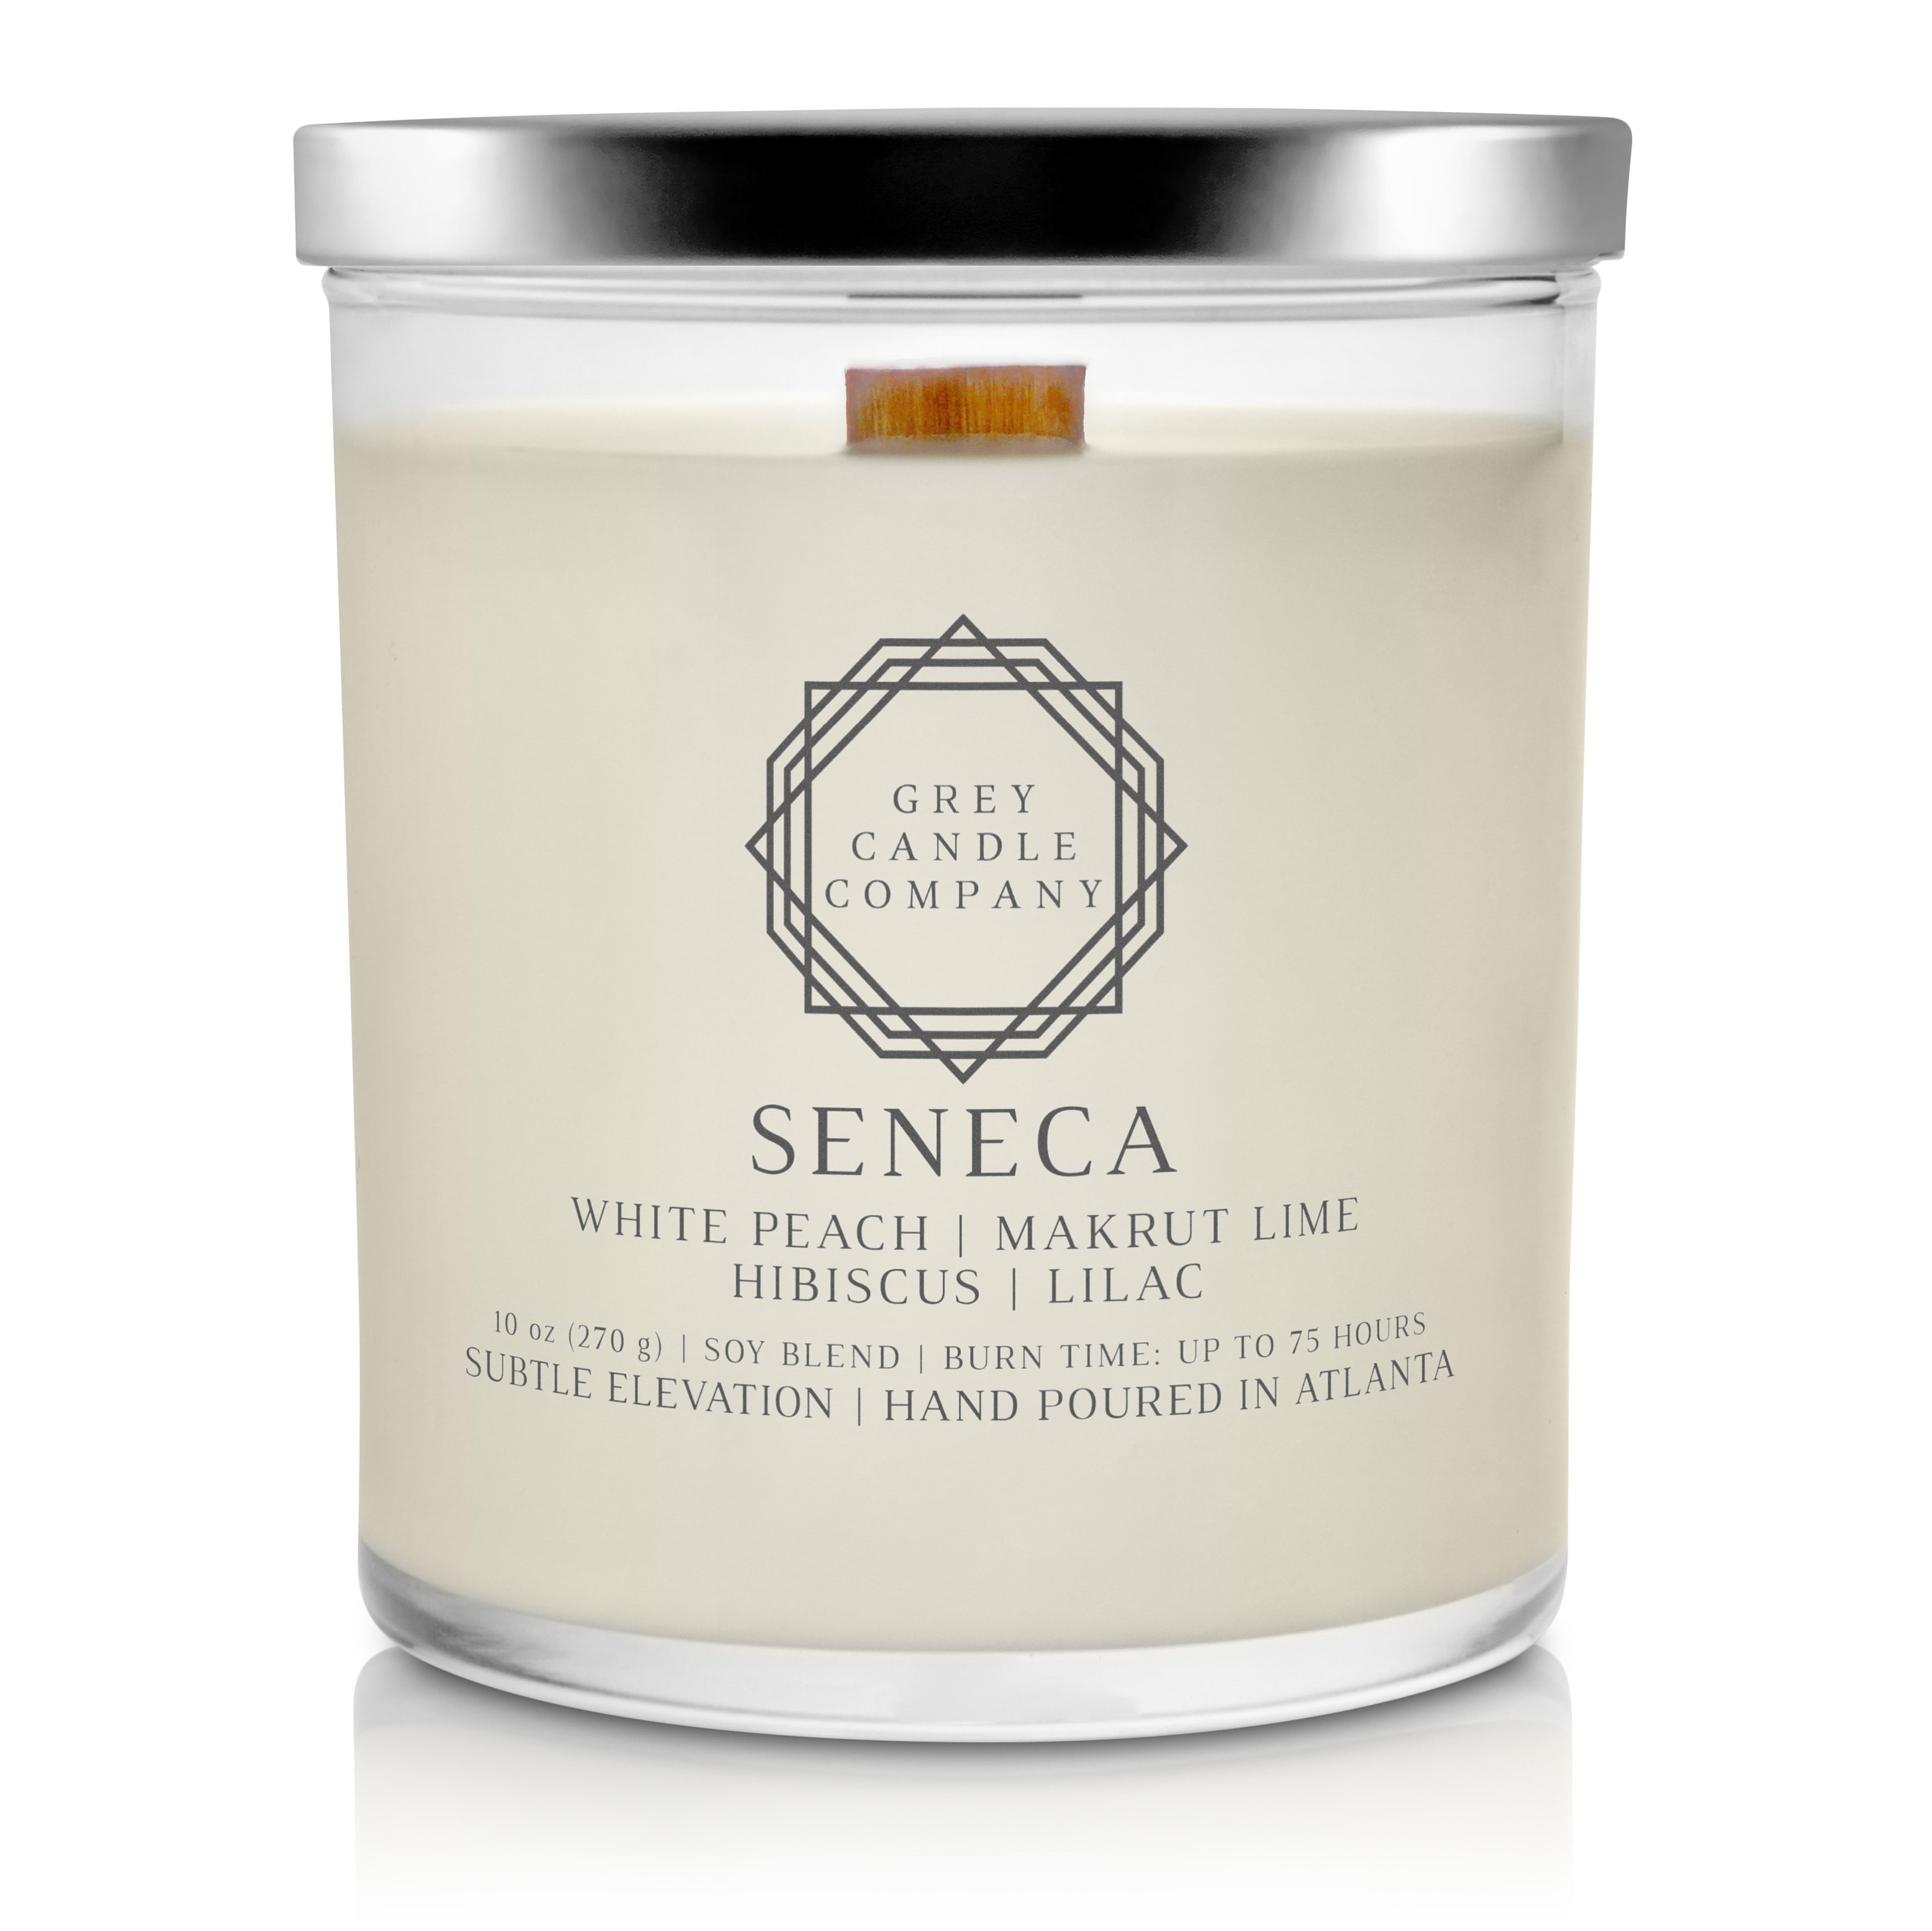 SENECA (Spring Limited Edition Scent)